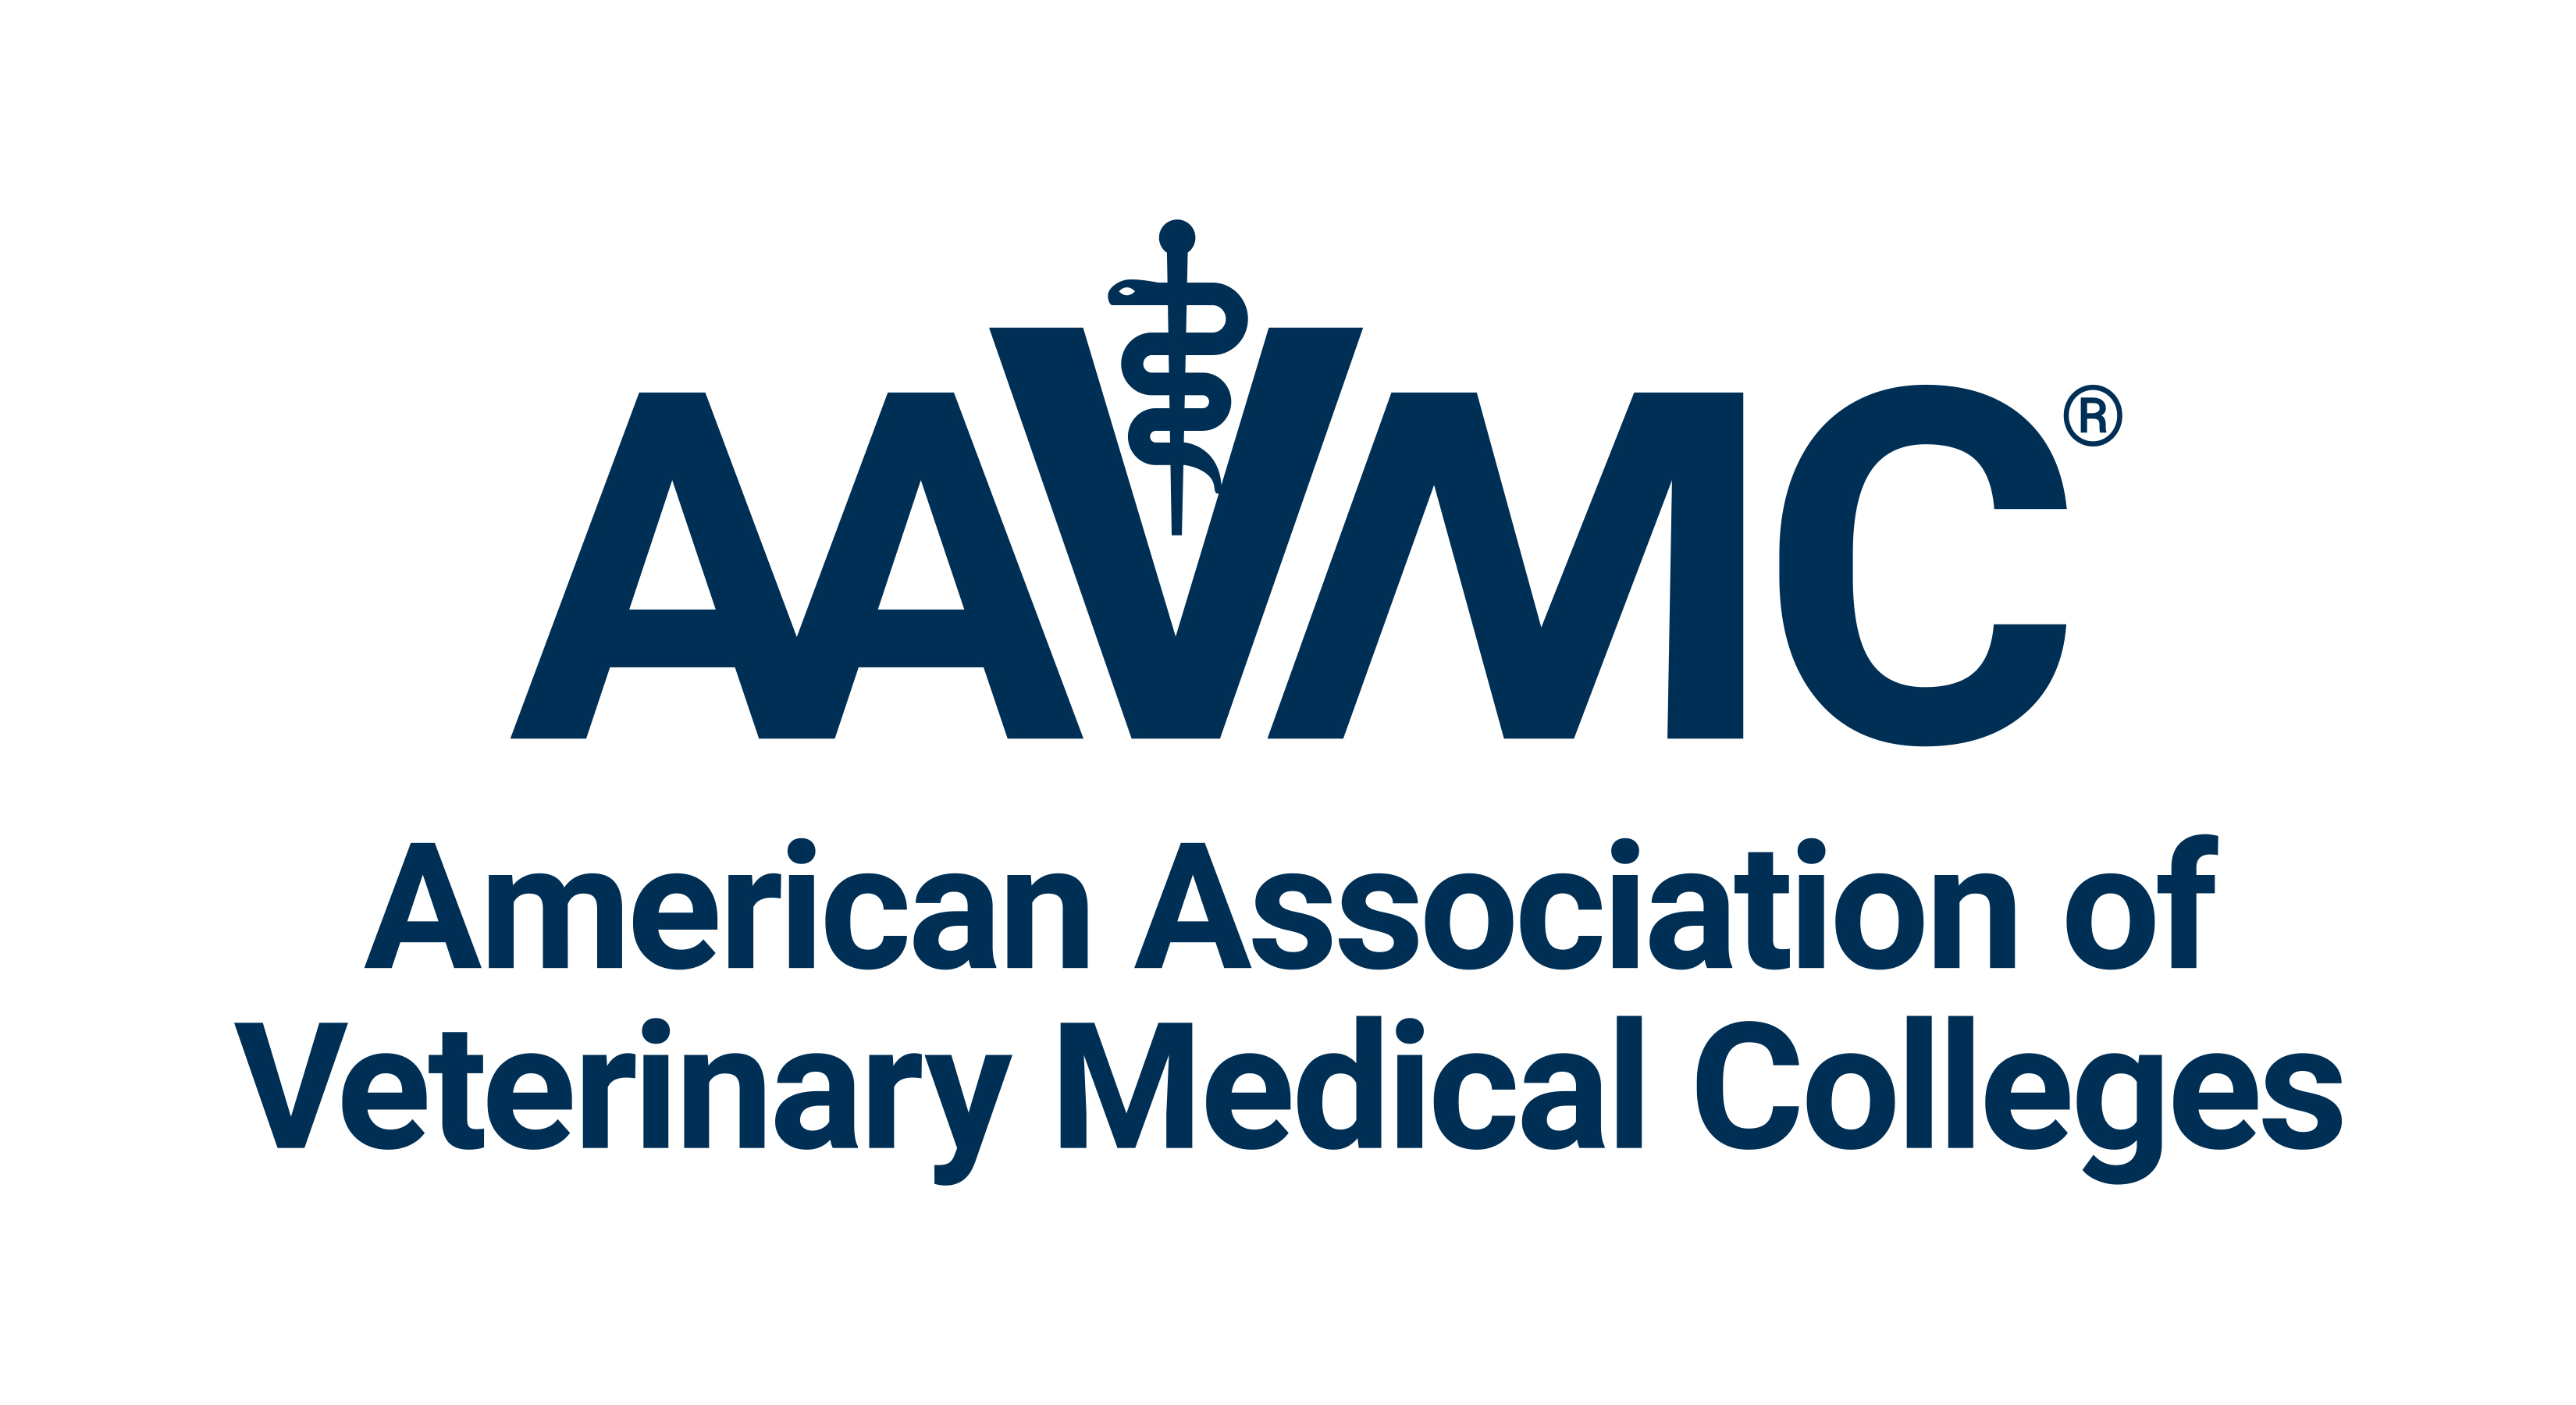 AAVMC logo